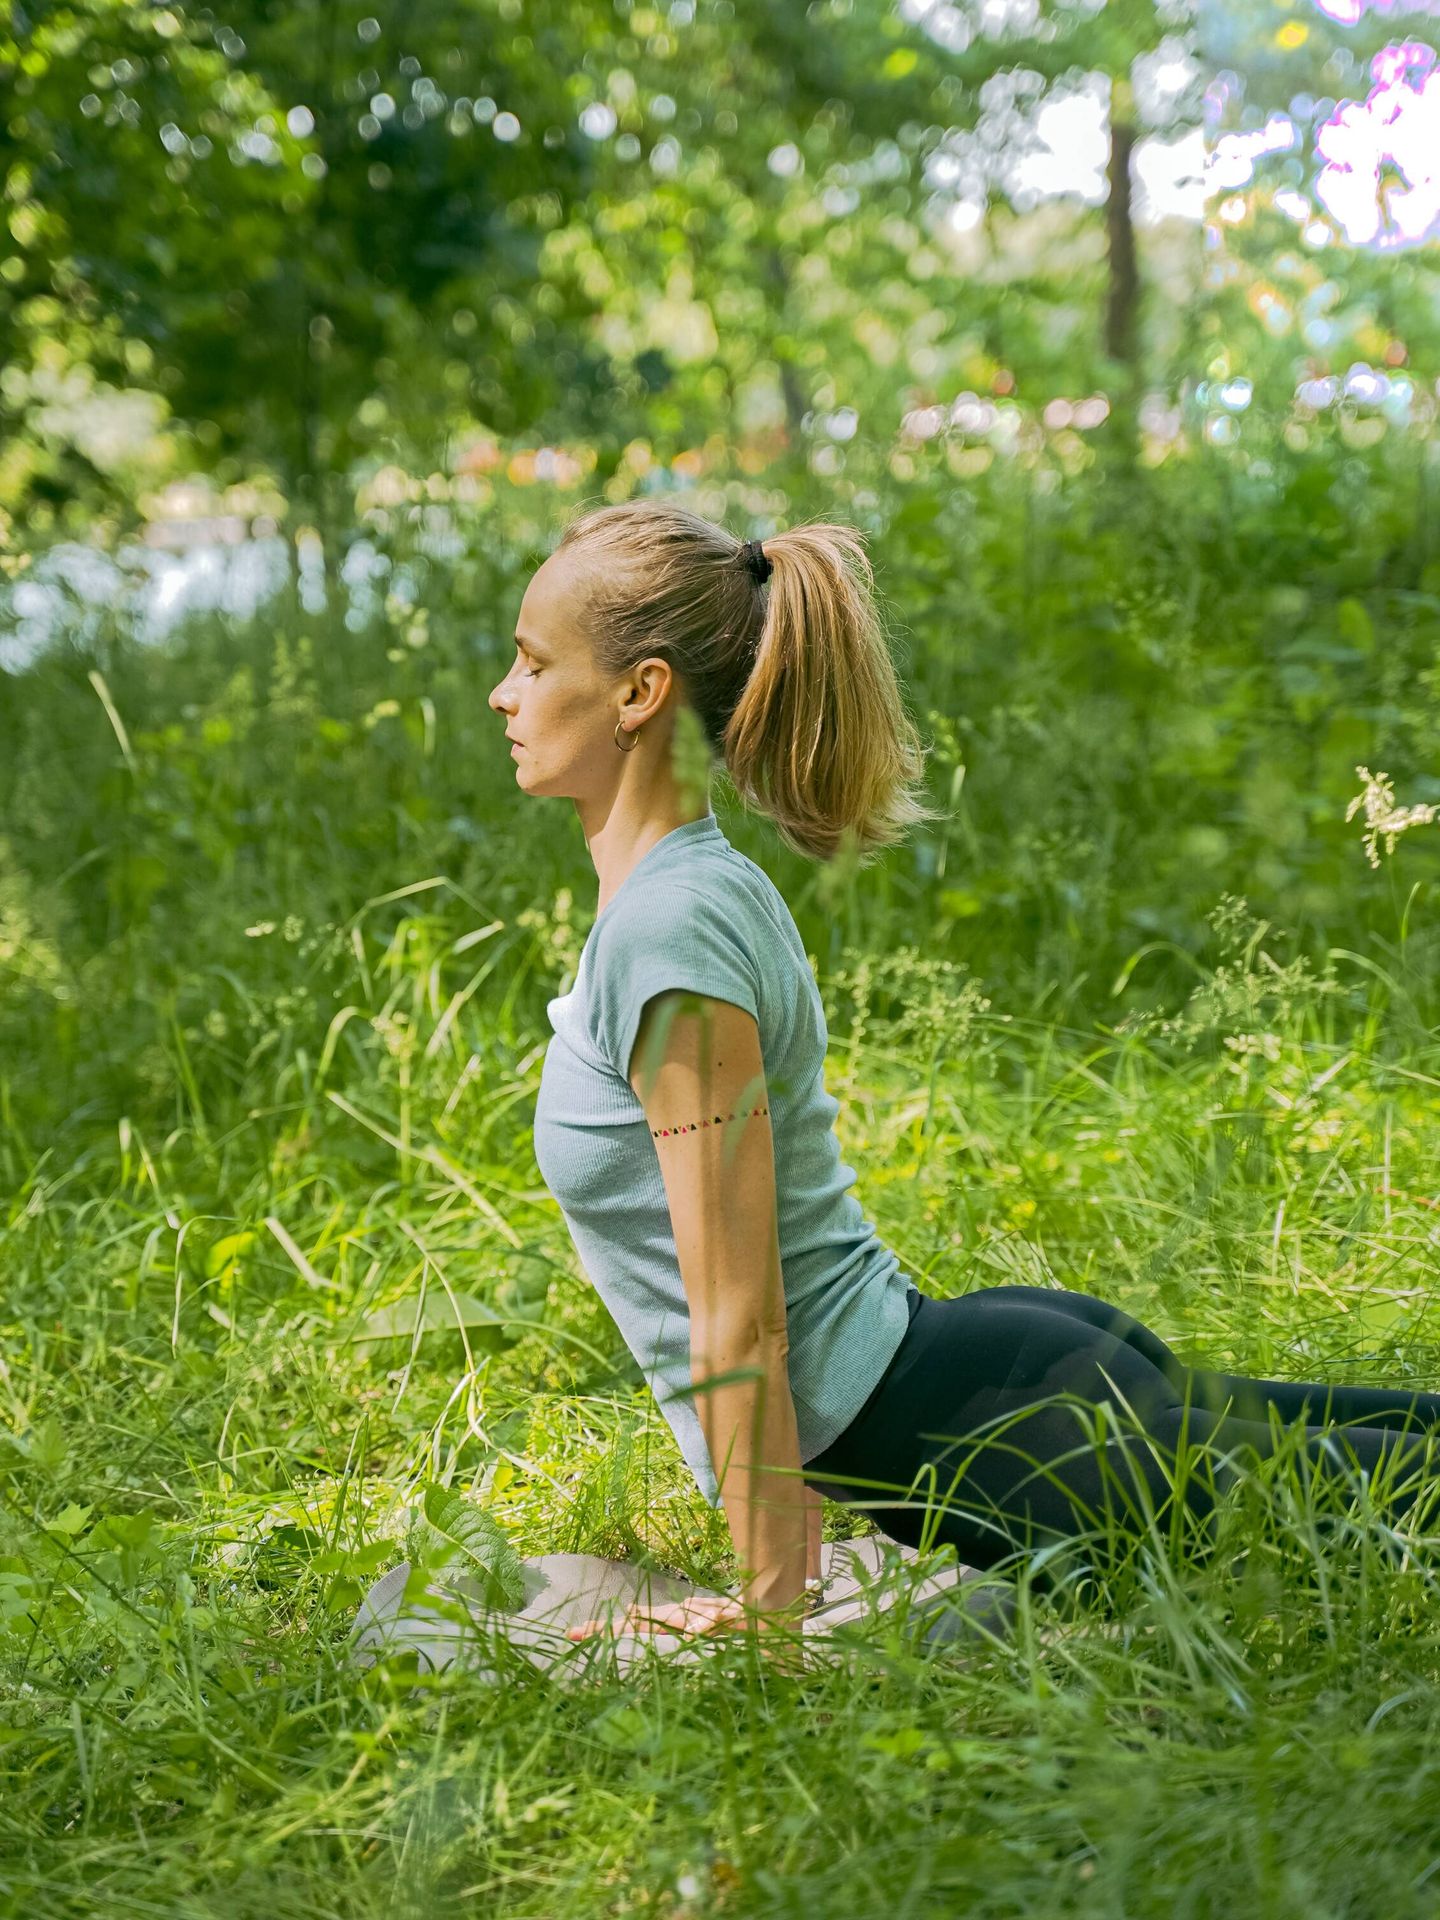 Acelera tu metabolismo con yoga. (Pexels/ANTONI SHKRABA)